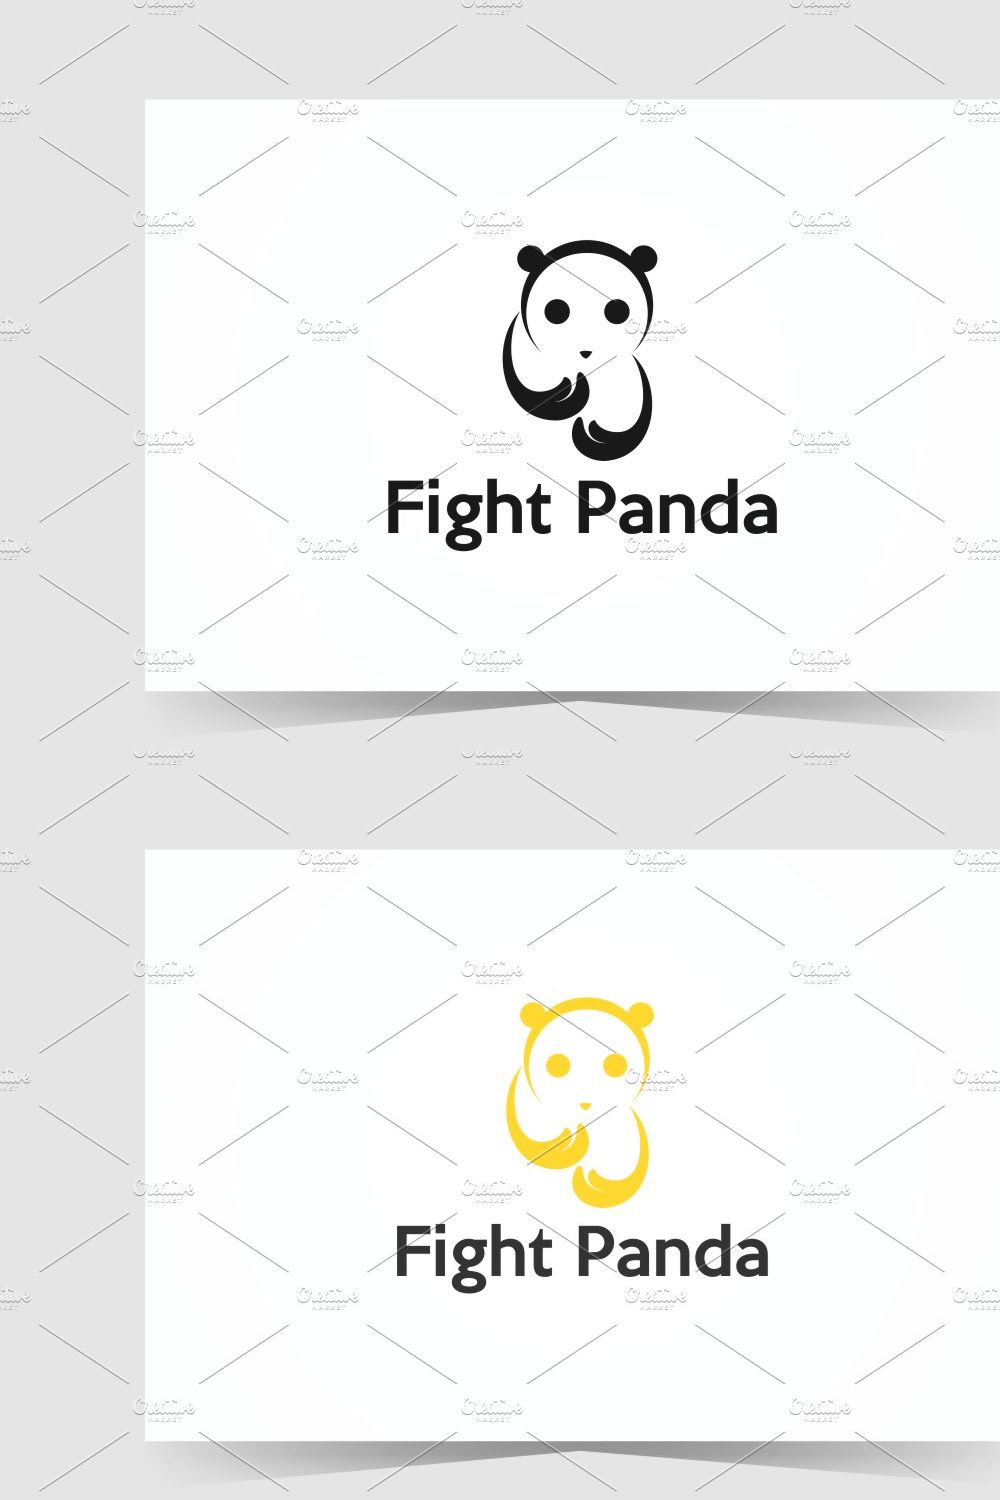 Fight Panda - Logo pinterest preview image.